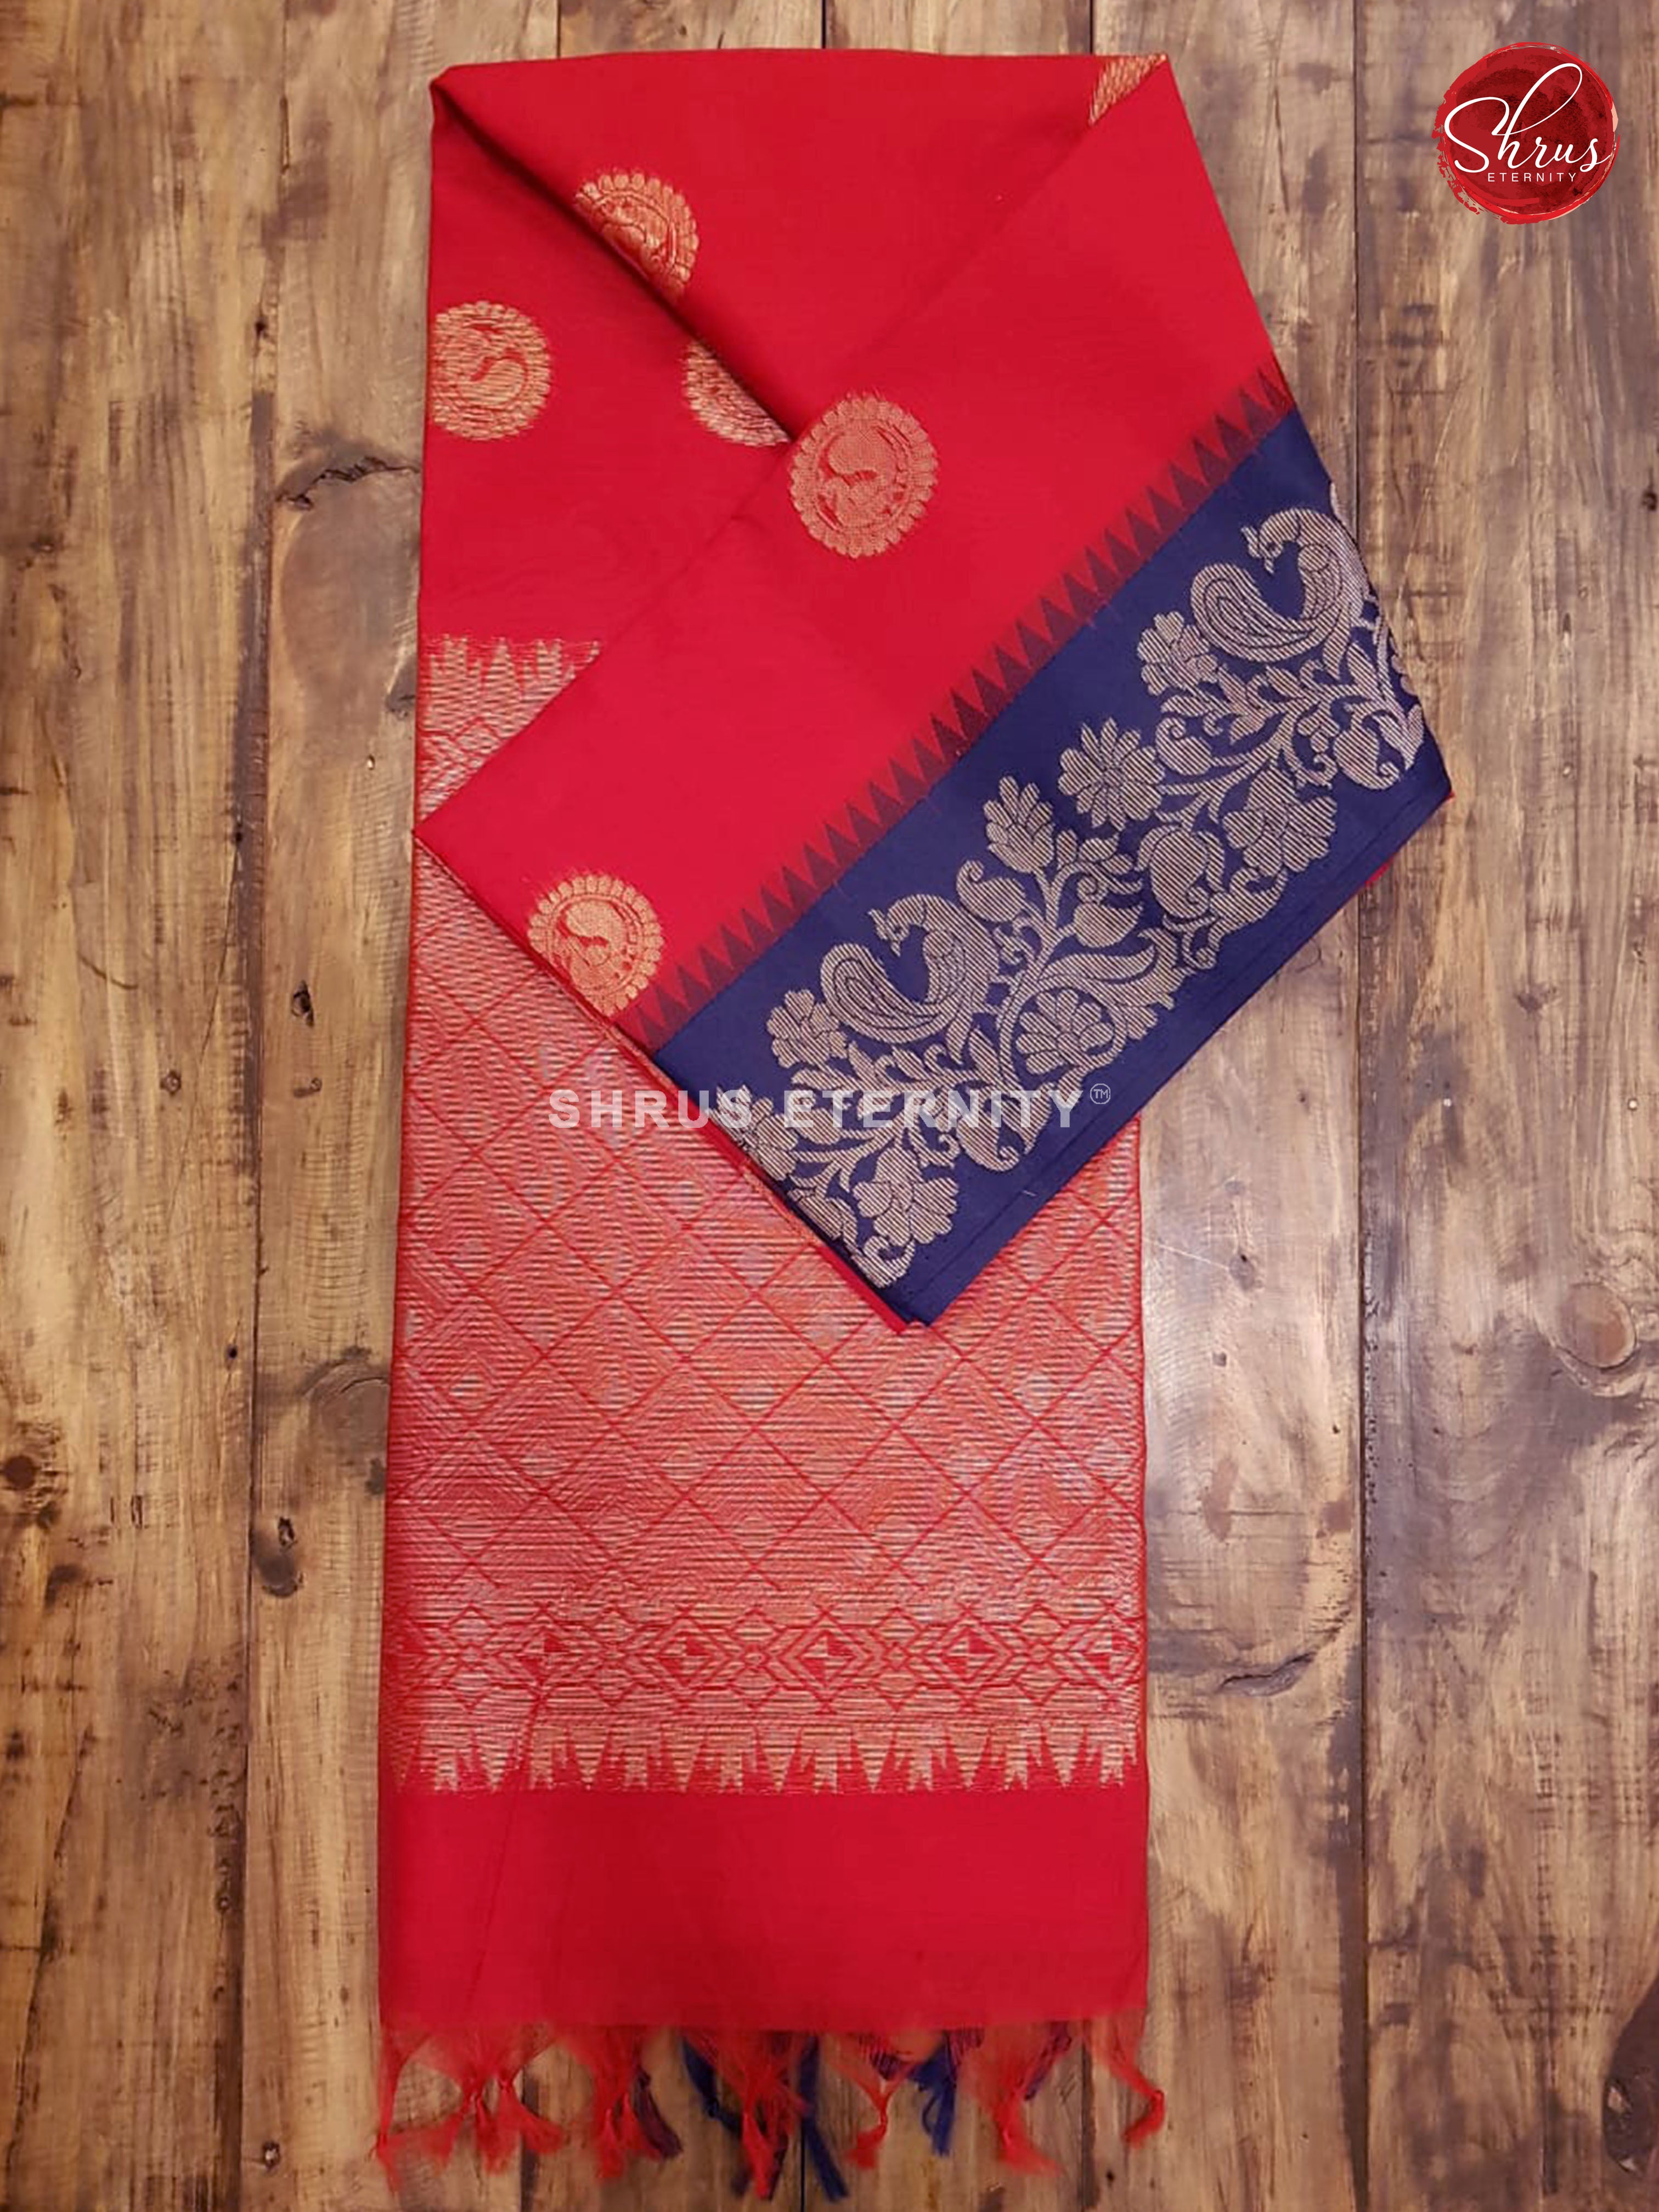 Red & Blue  - Kora Cotton Silk - Shop on ShrusEternity.com